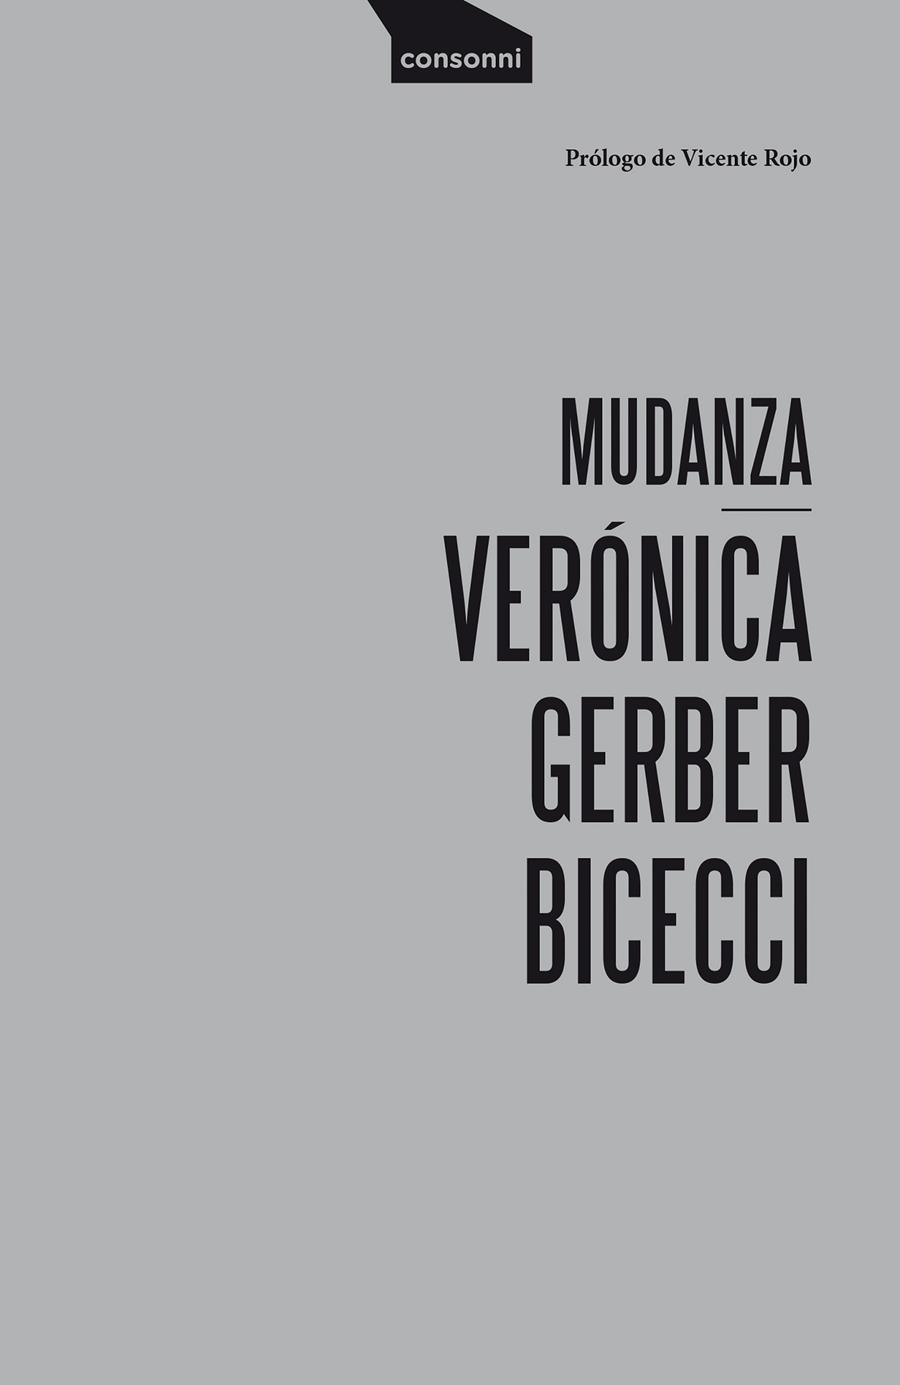 Mudanza | Gerber Bicecci, Verónica